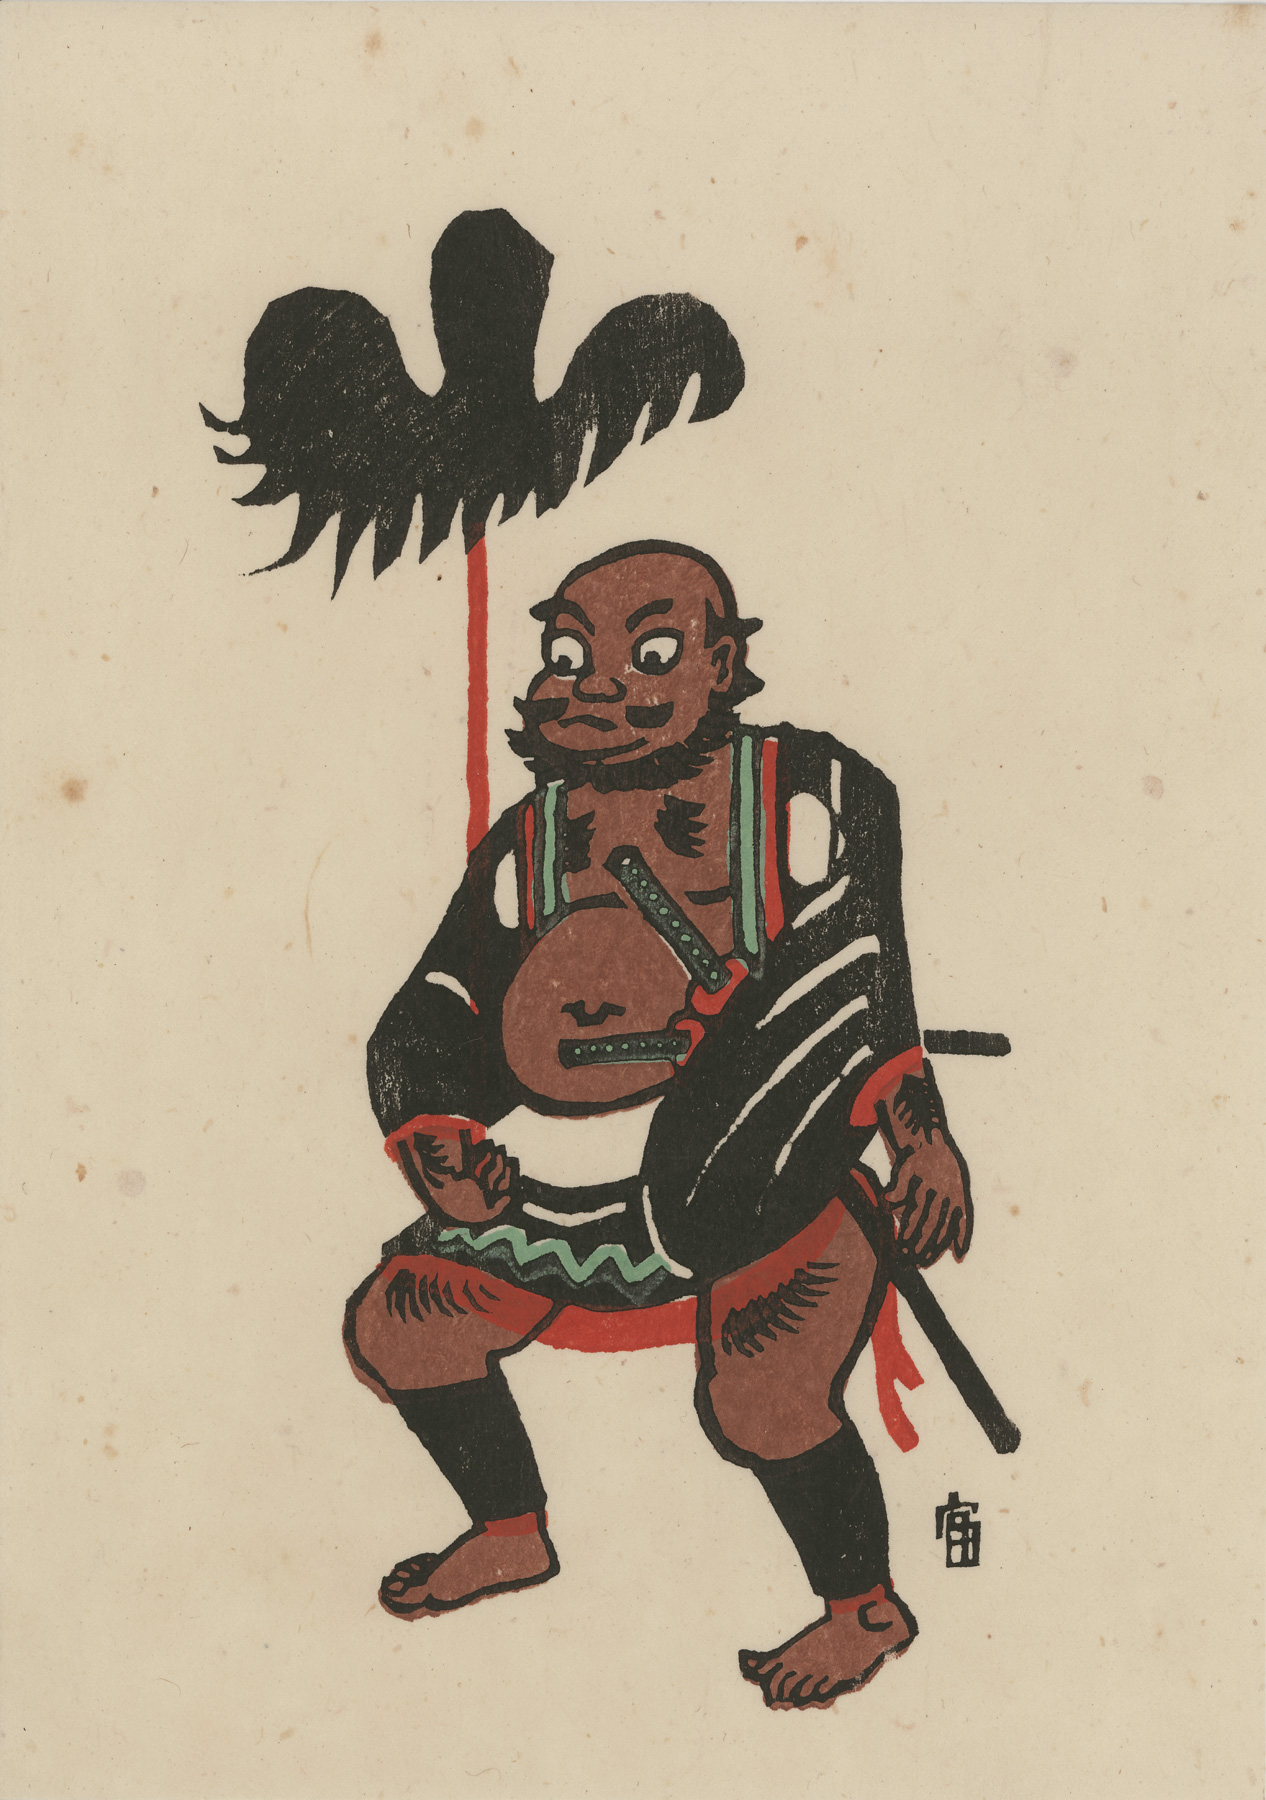 yoliee - Hobbyist, Traditional Artist